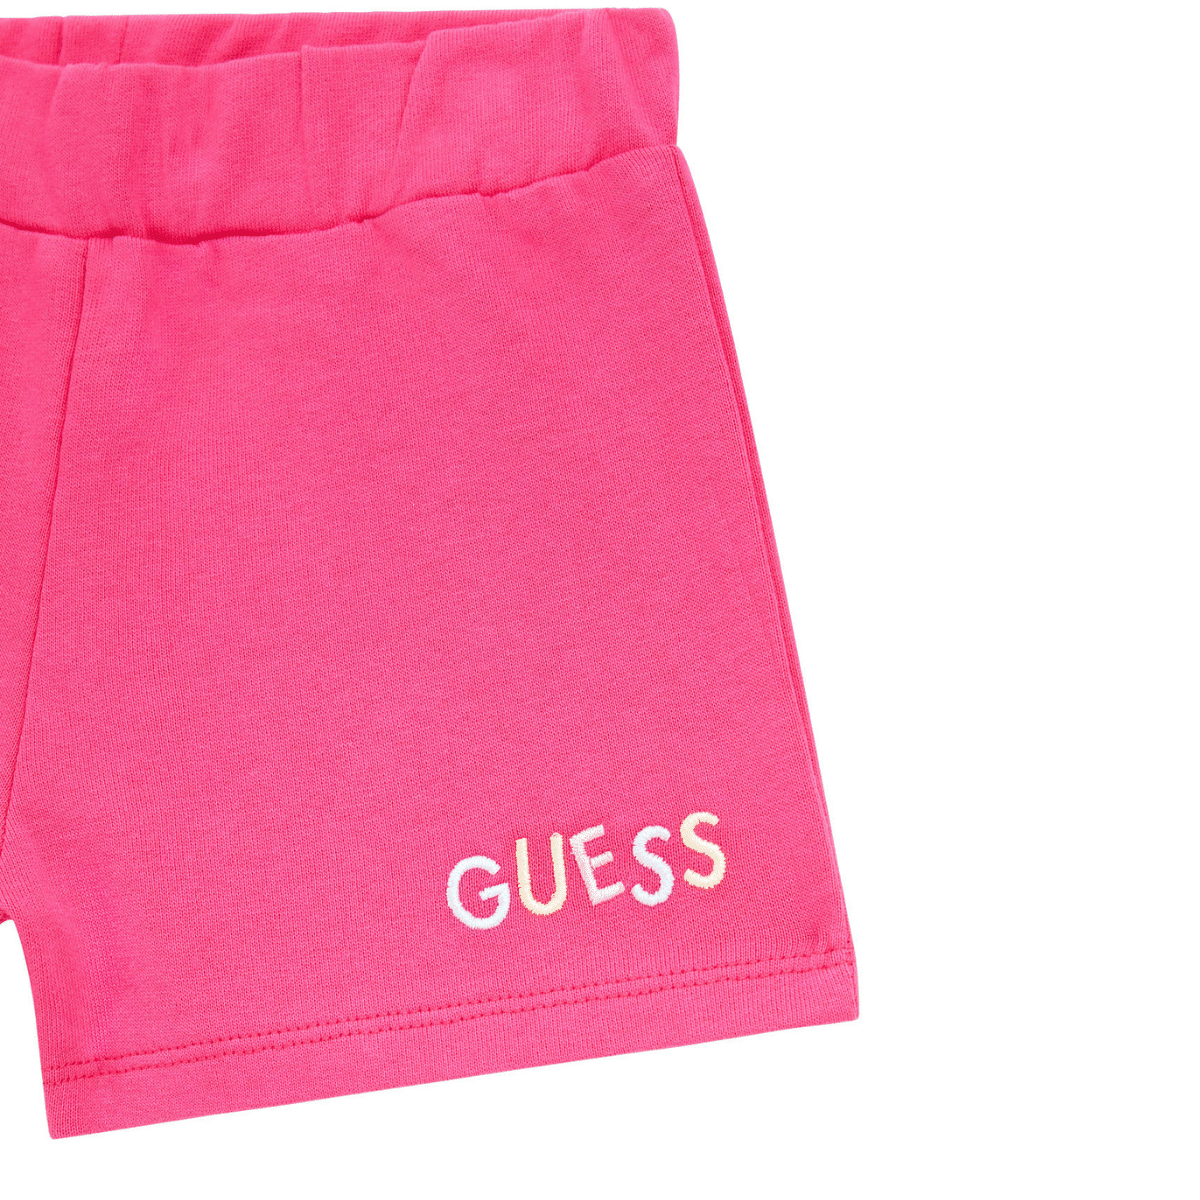 guess girls pink shorts close up view